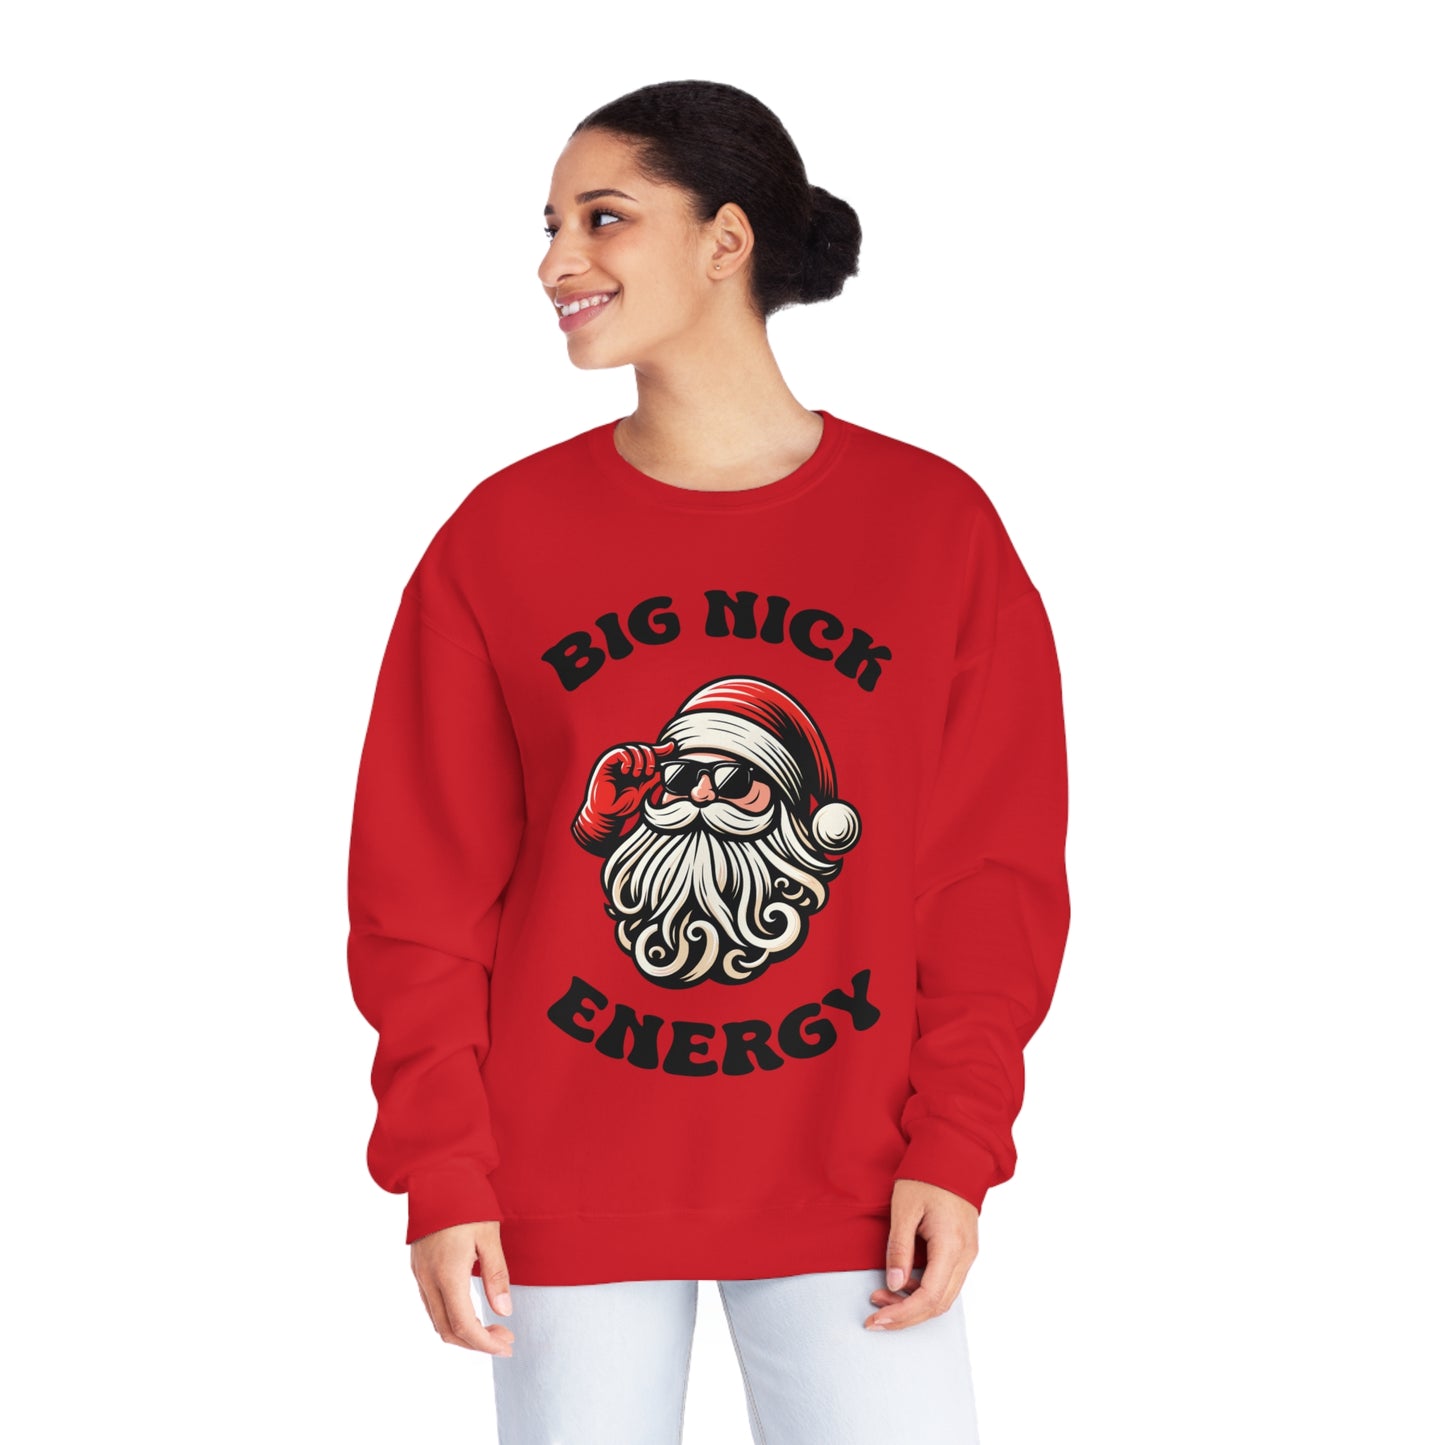 "Big Nick Energy" Christmas Sweater